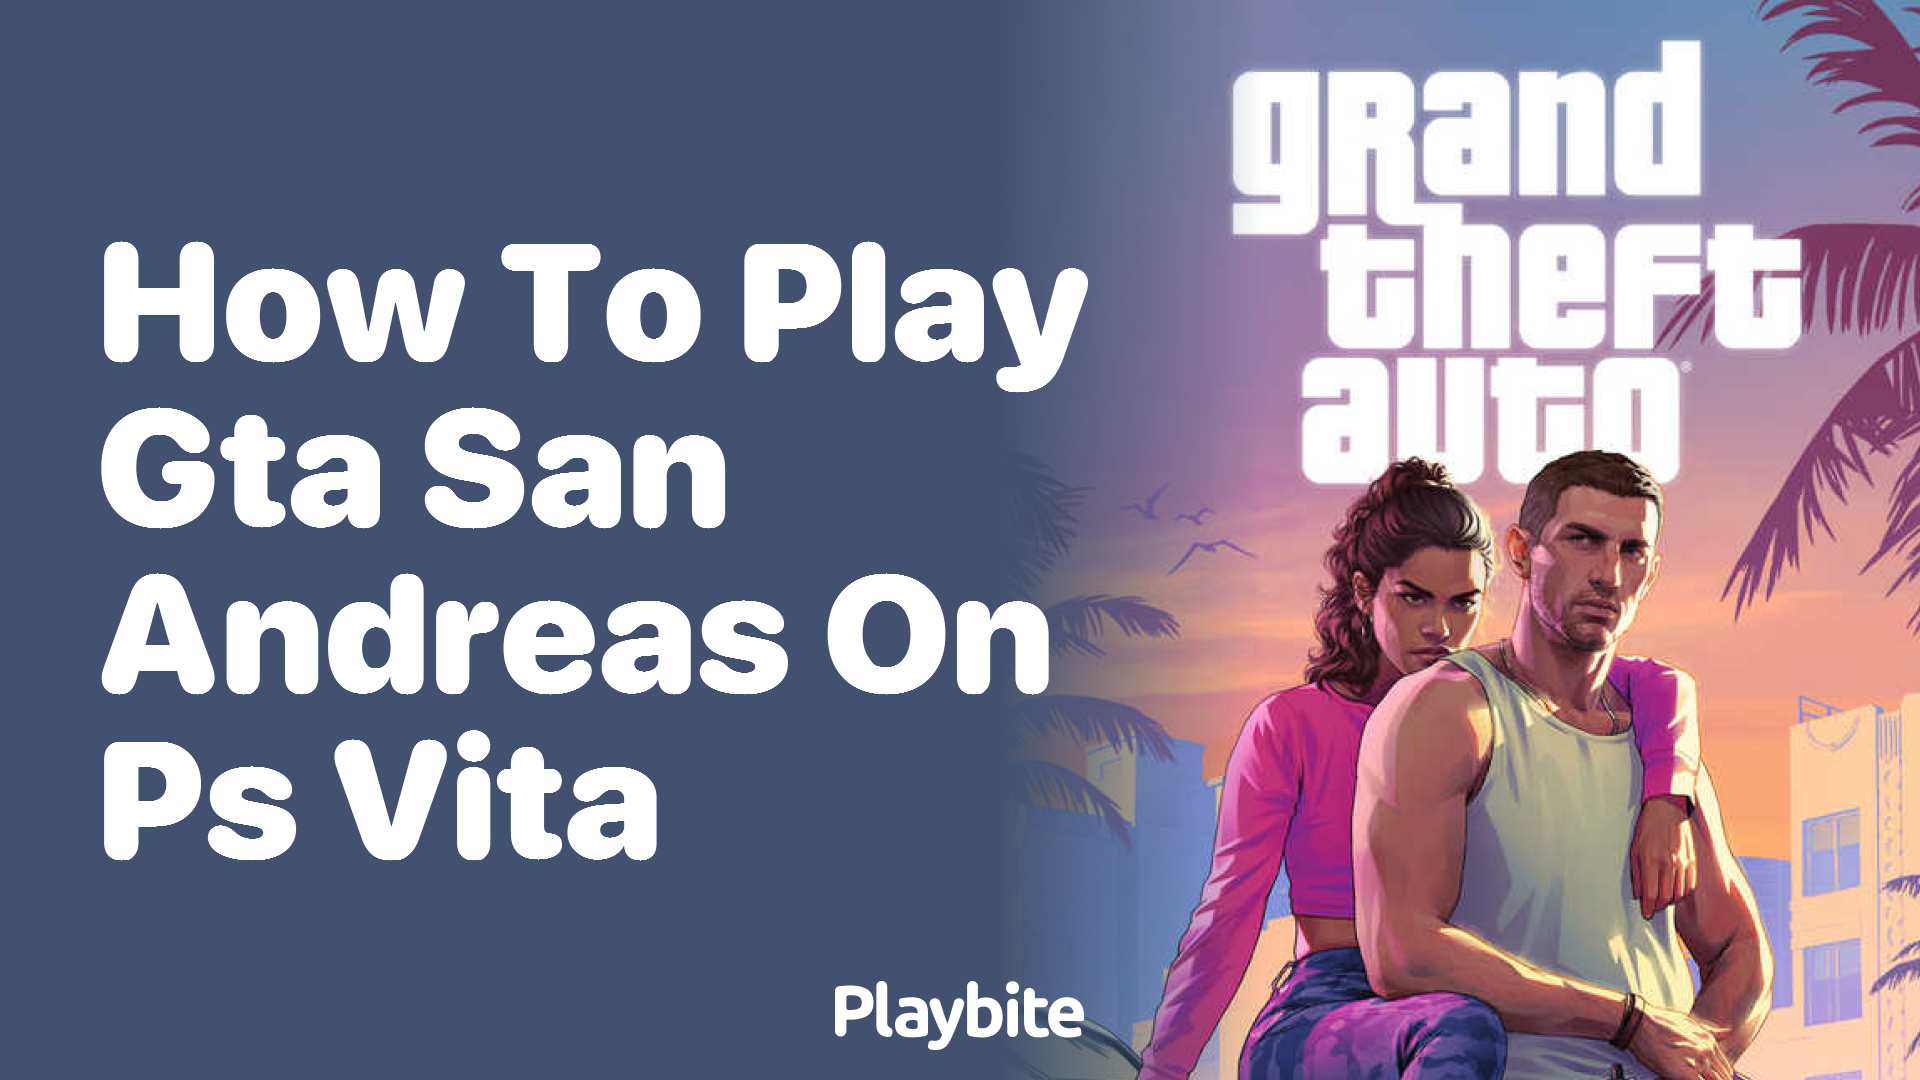 How to play GTA San Andreas on PS Vita